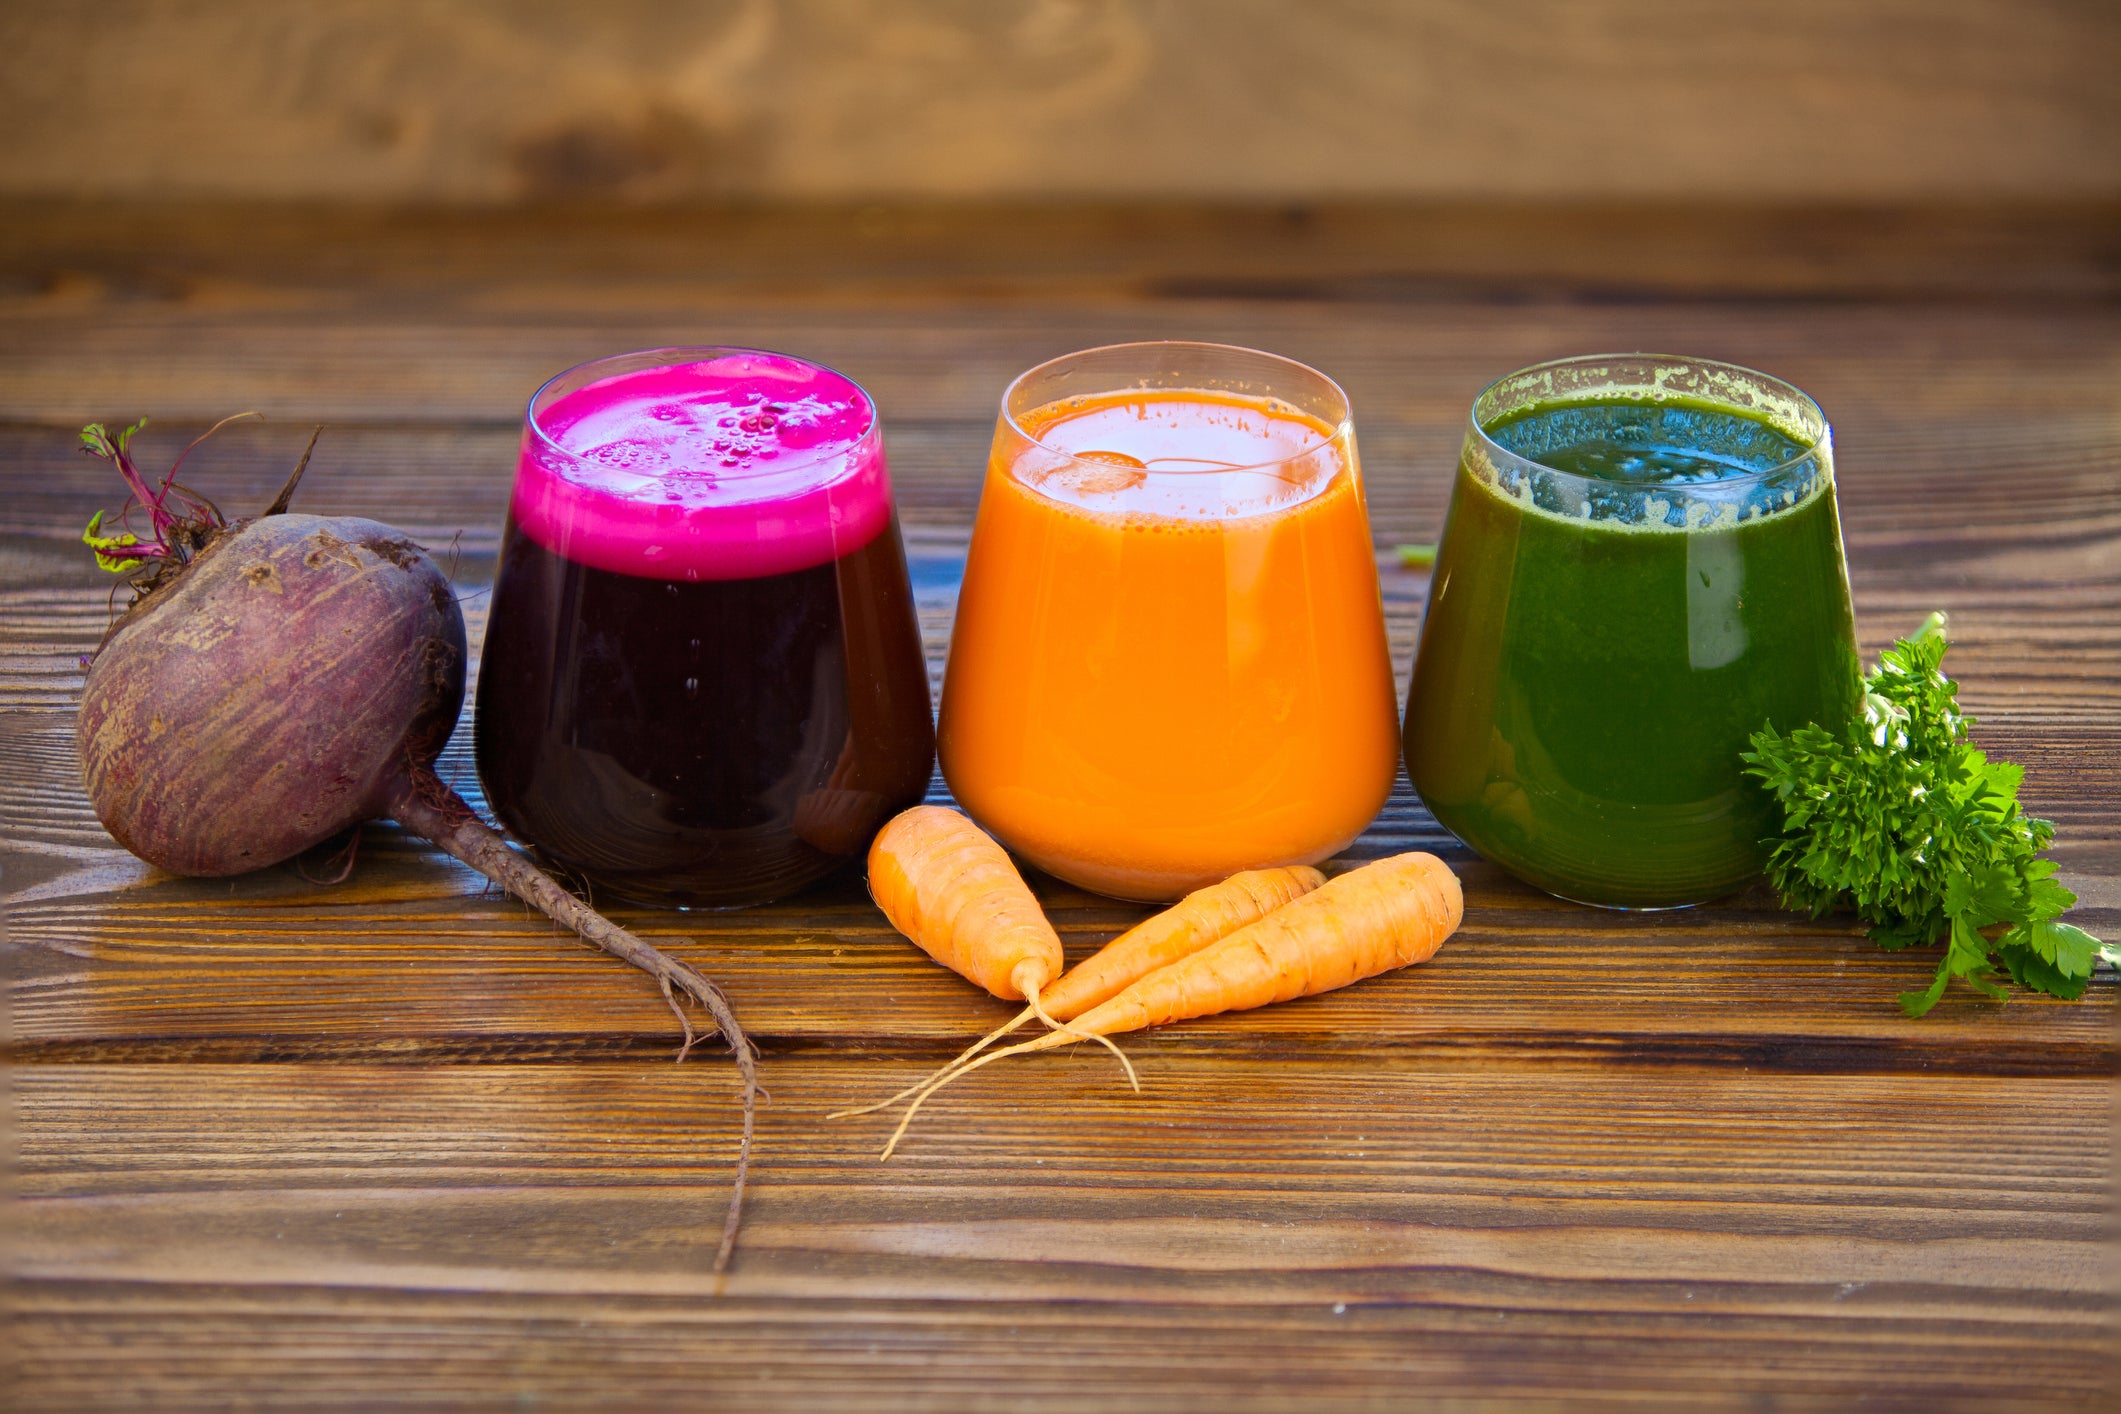 Kale juice, carrot juice, and beetroot juice